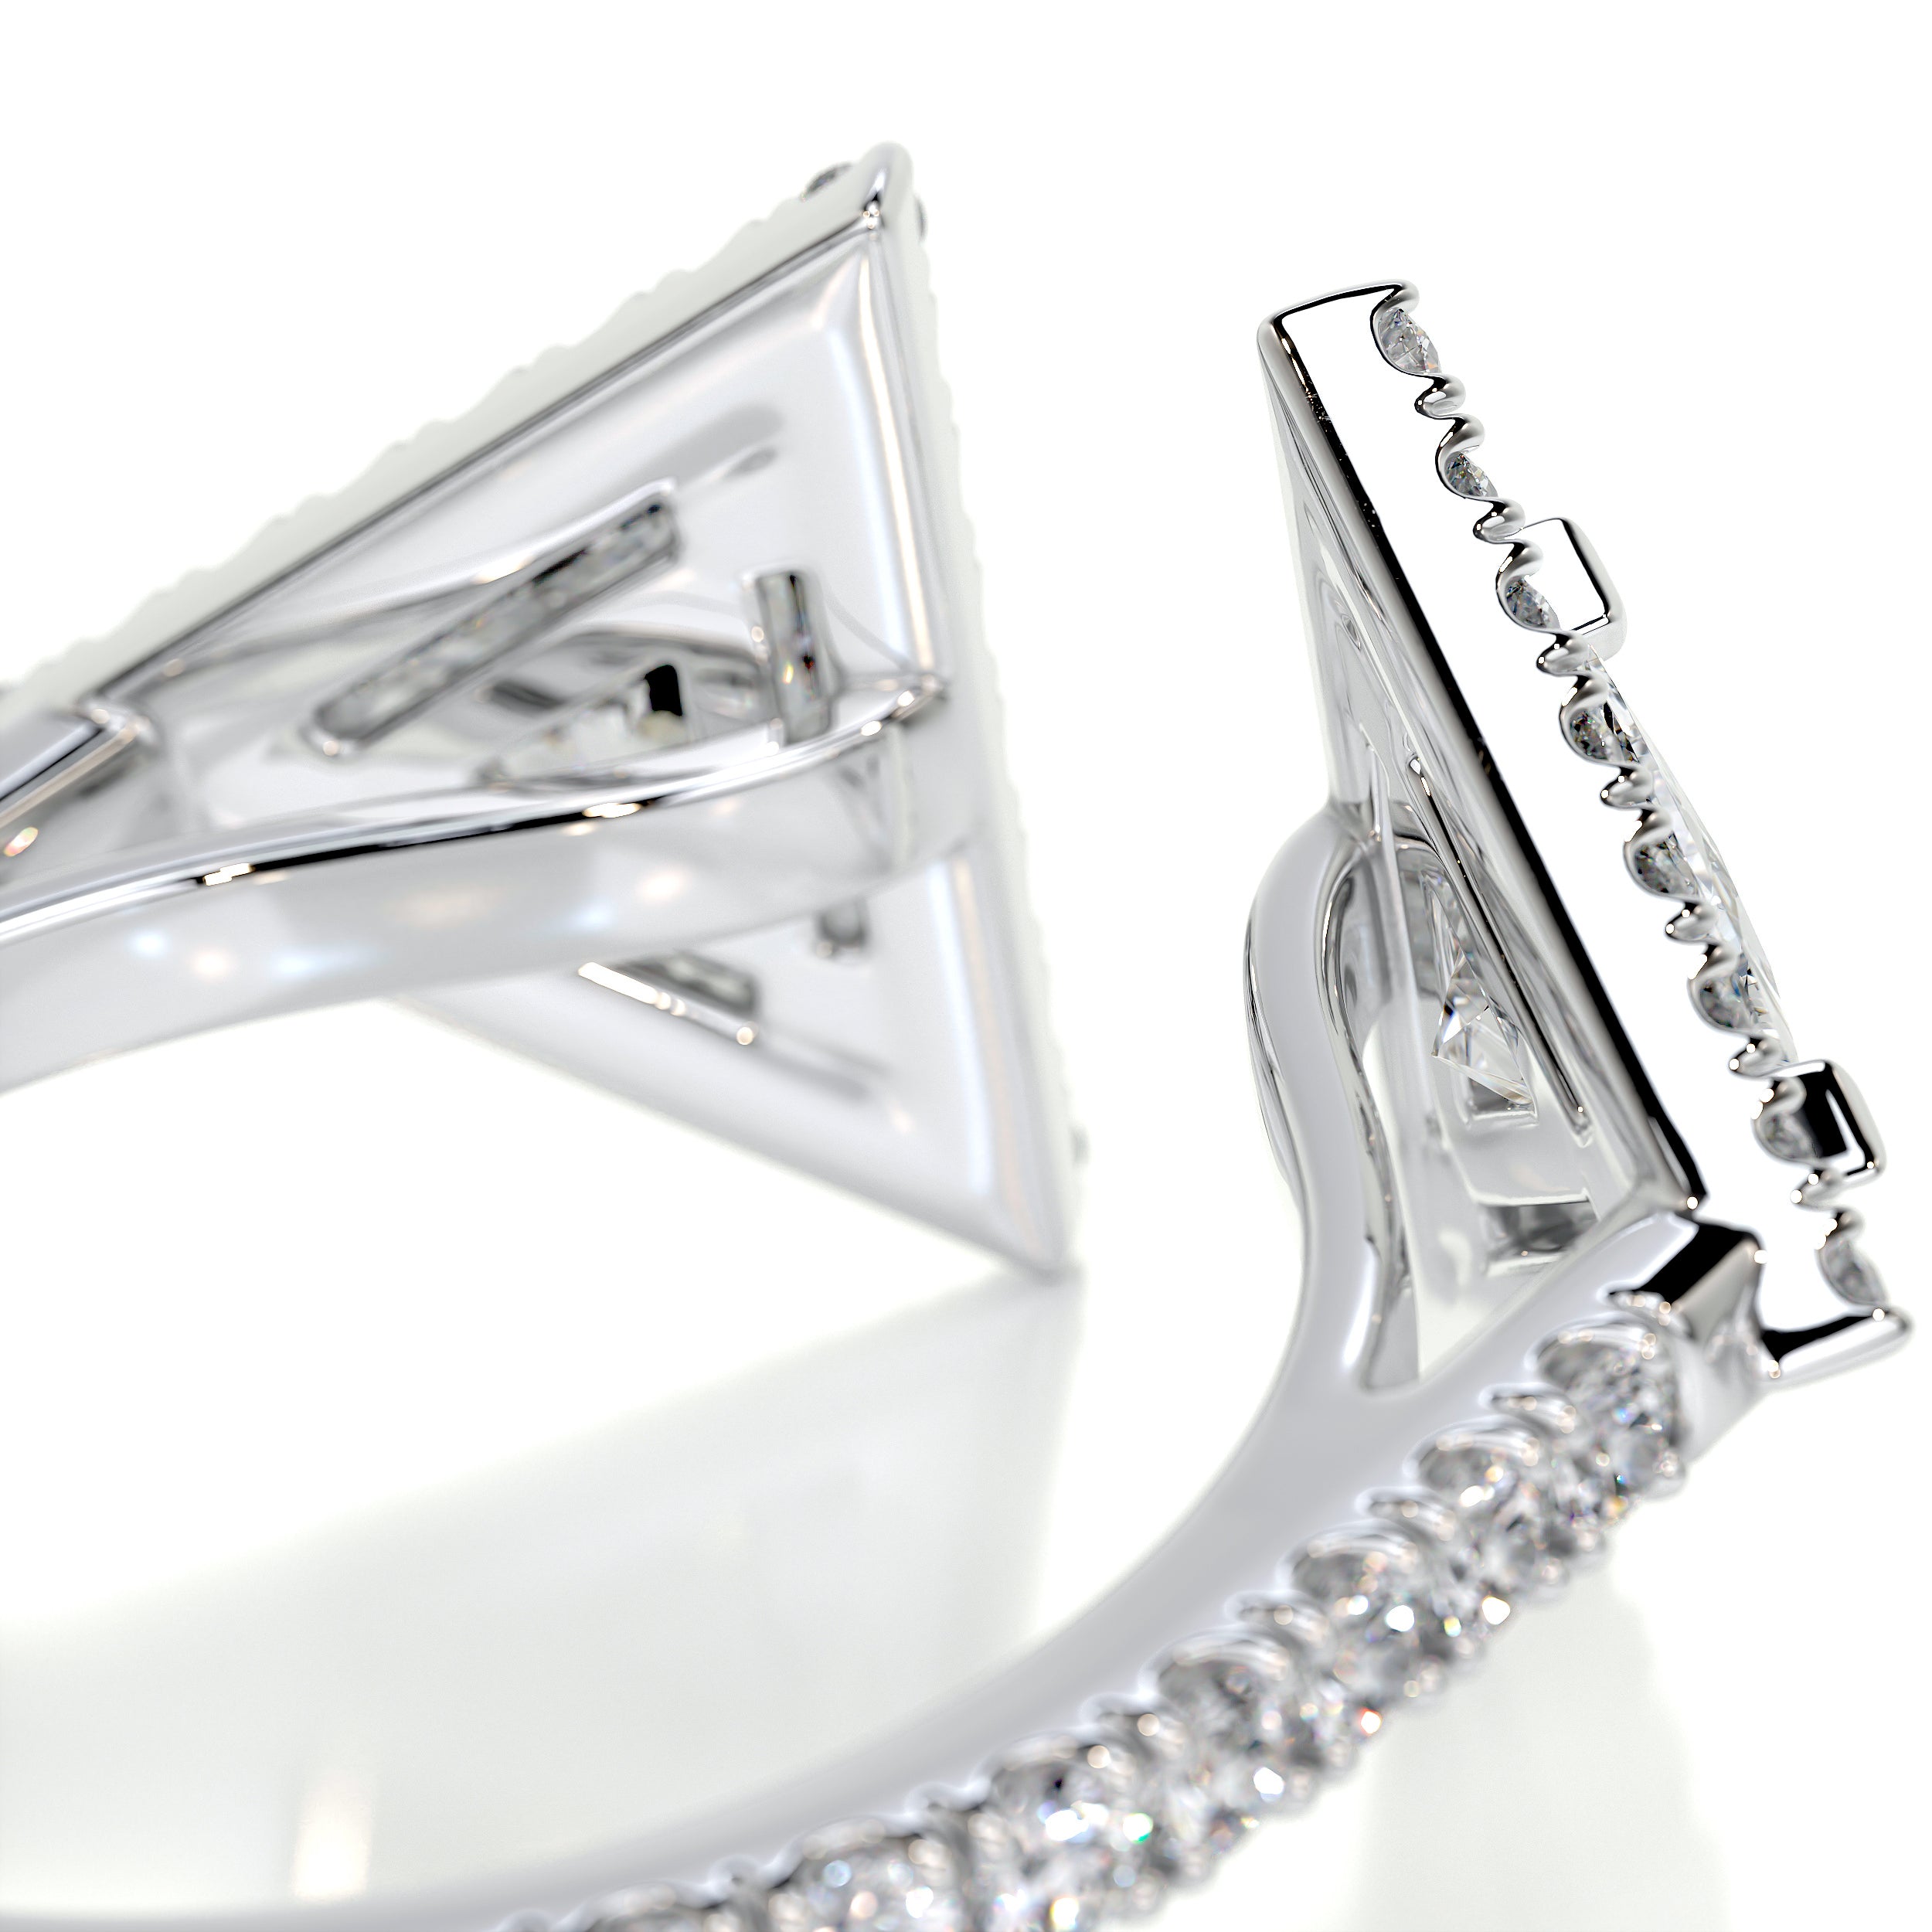 Olivia Fashion Diamond Ring   (1 carat) -Platinum